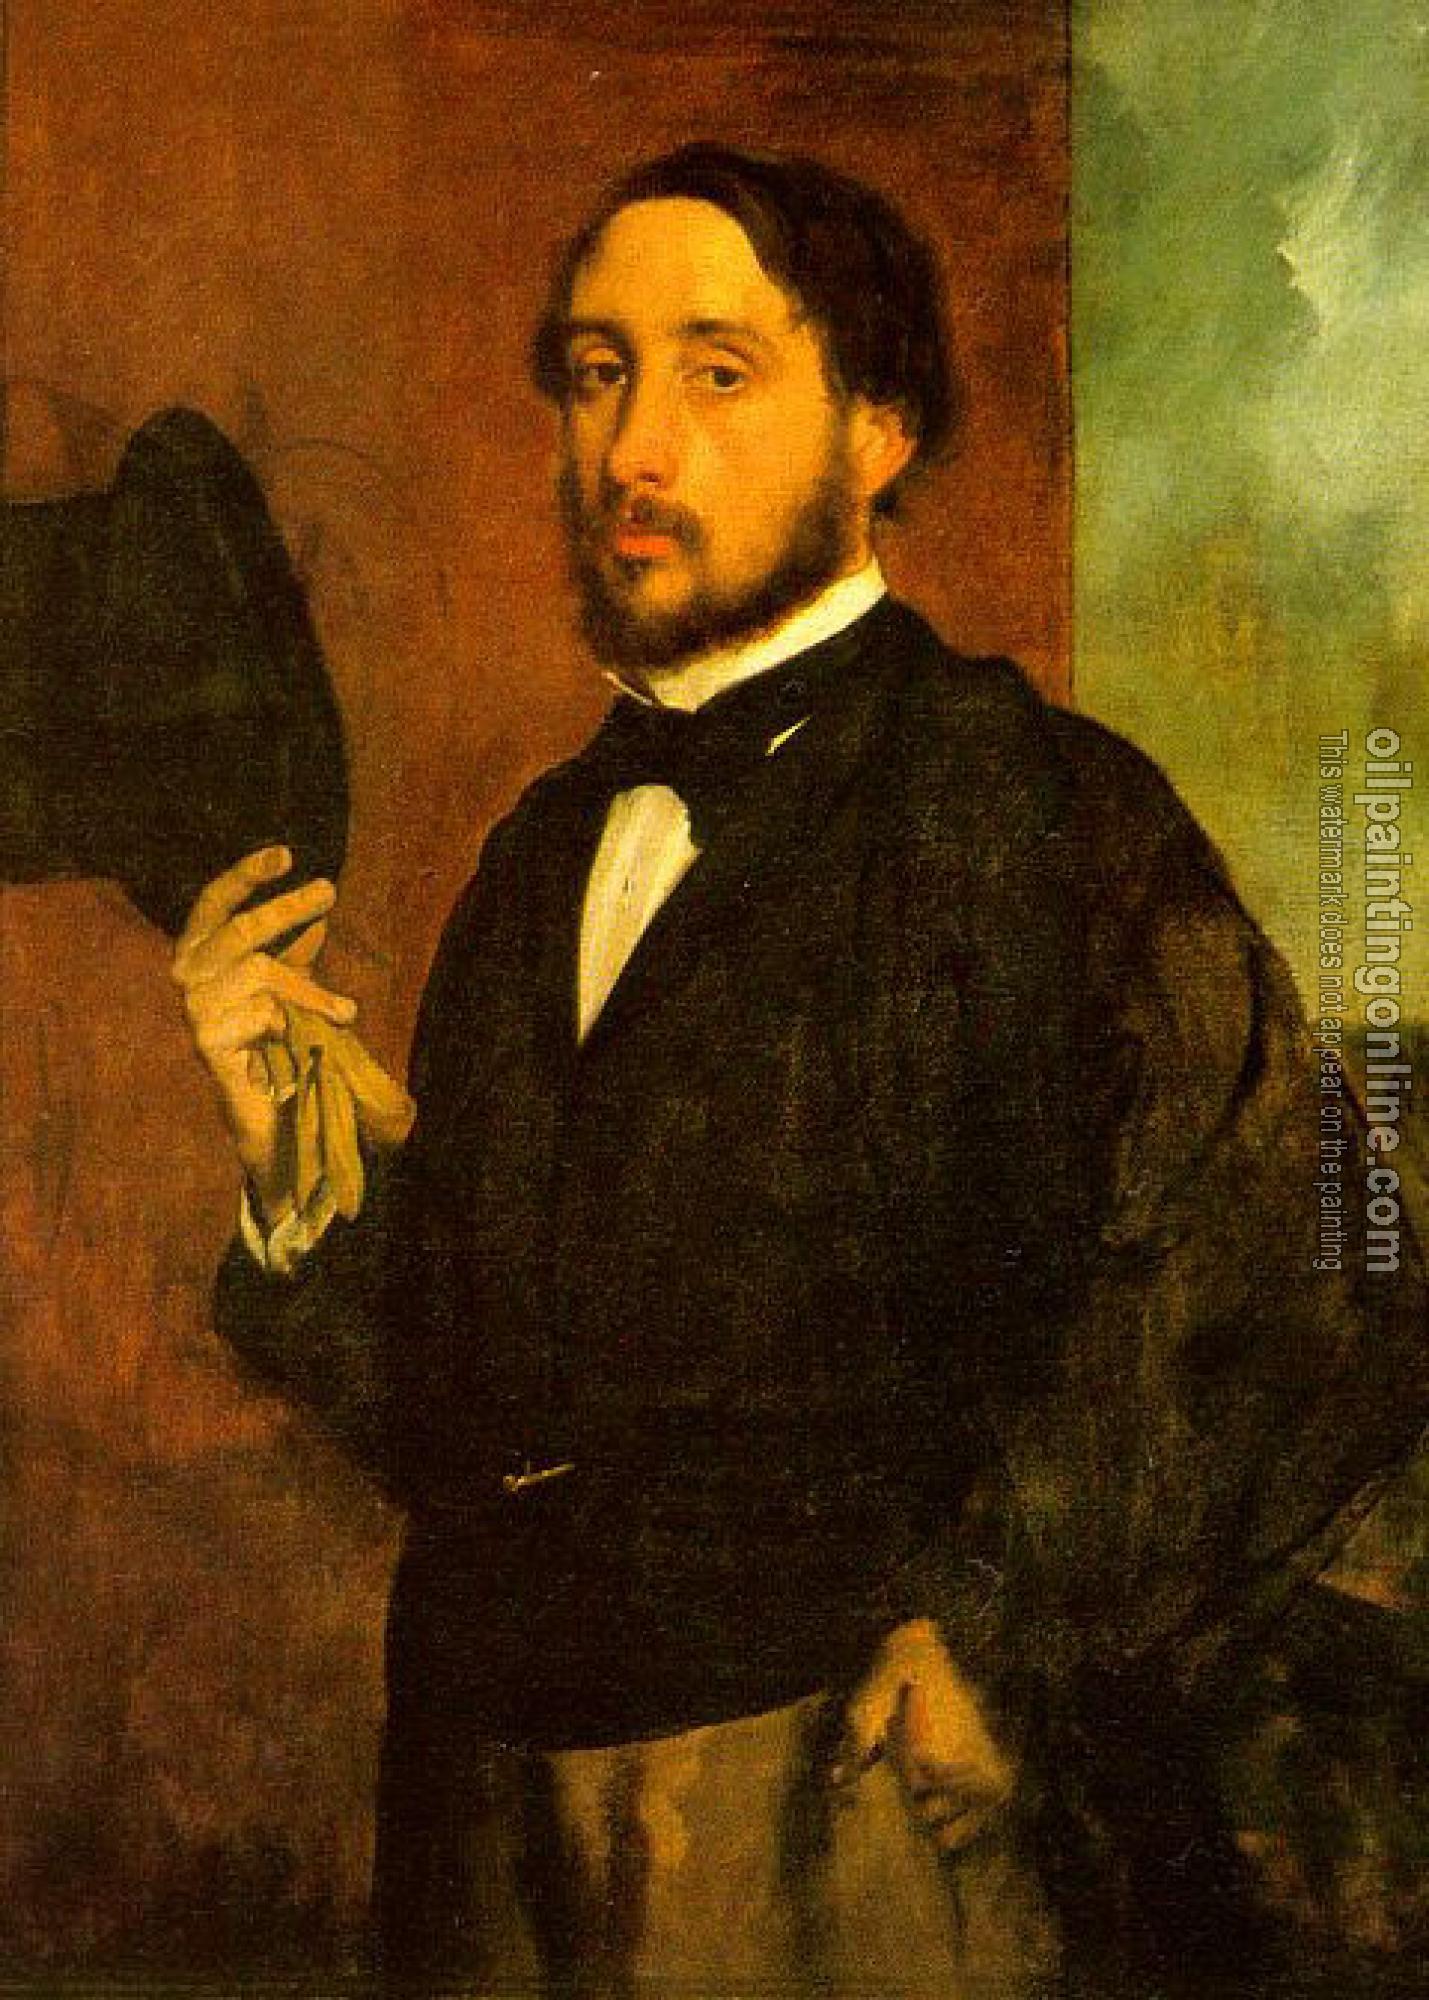 Degas, Edgar - Self Portrait